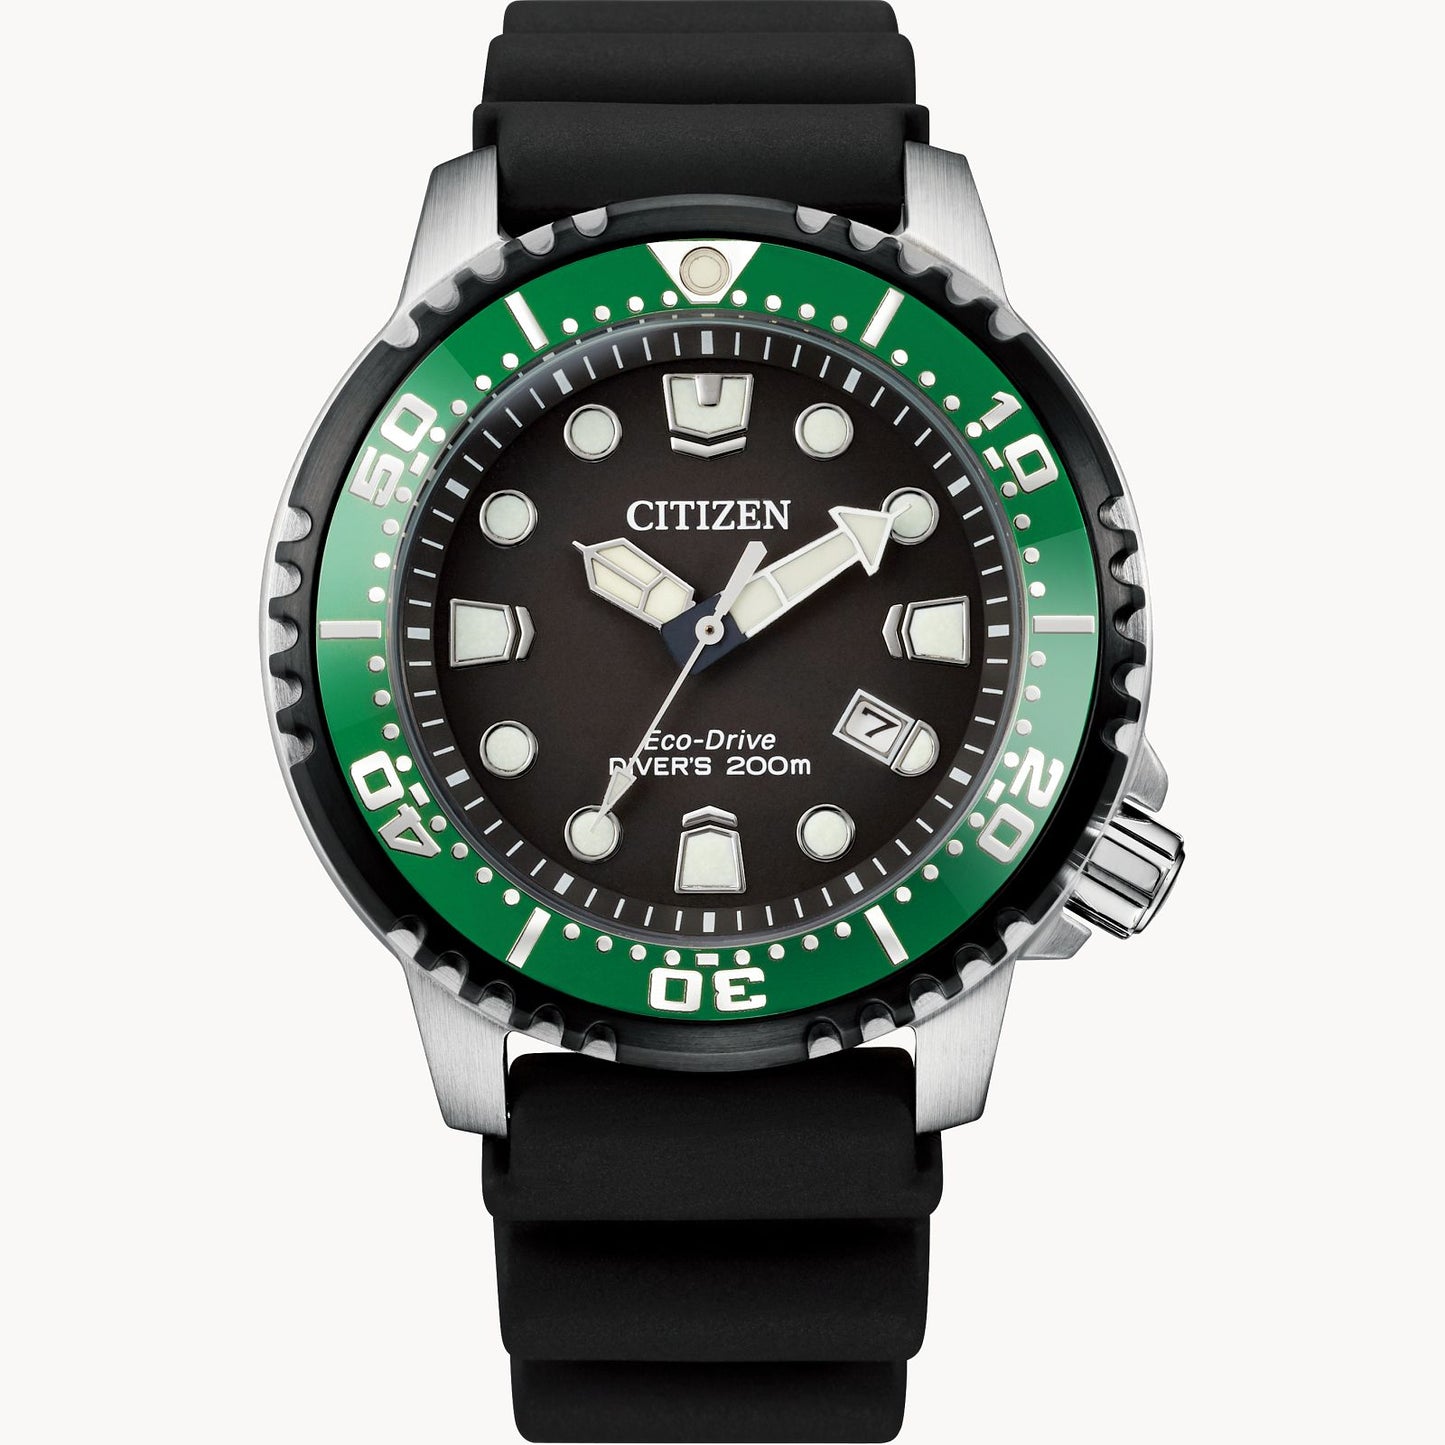 Citizen Promaster Dive Eco Drive Men's Watch BN0155-08E